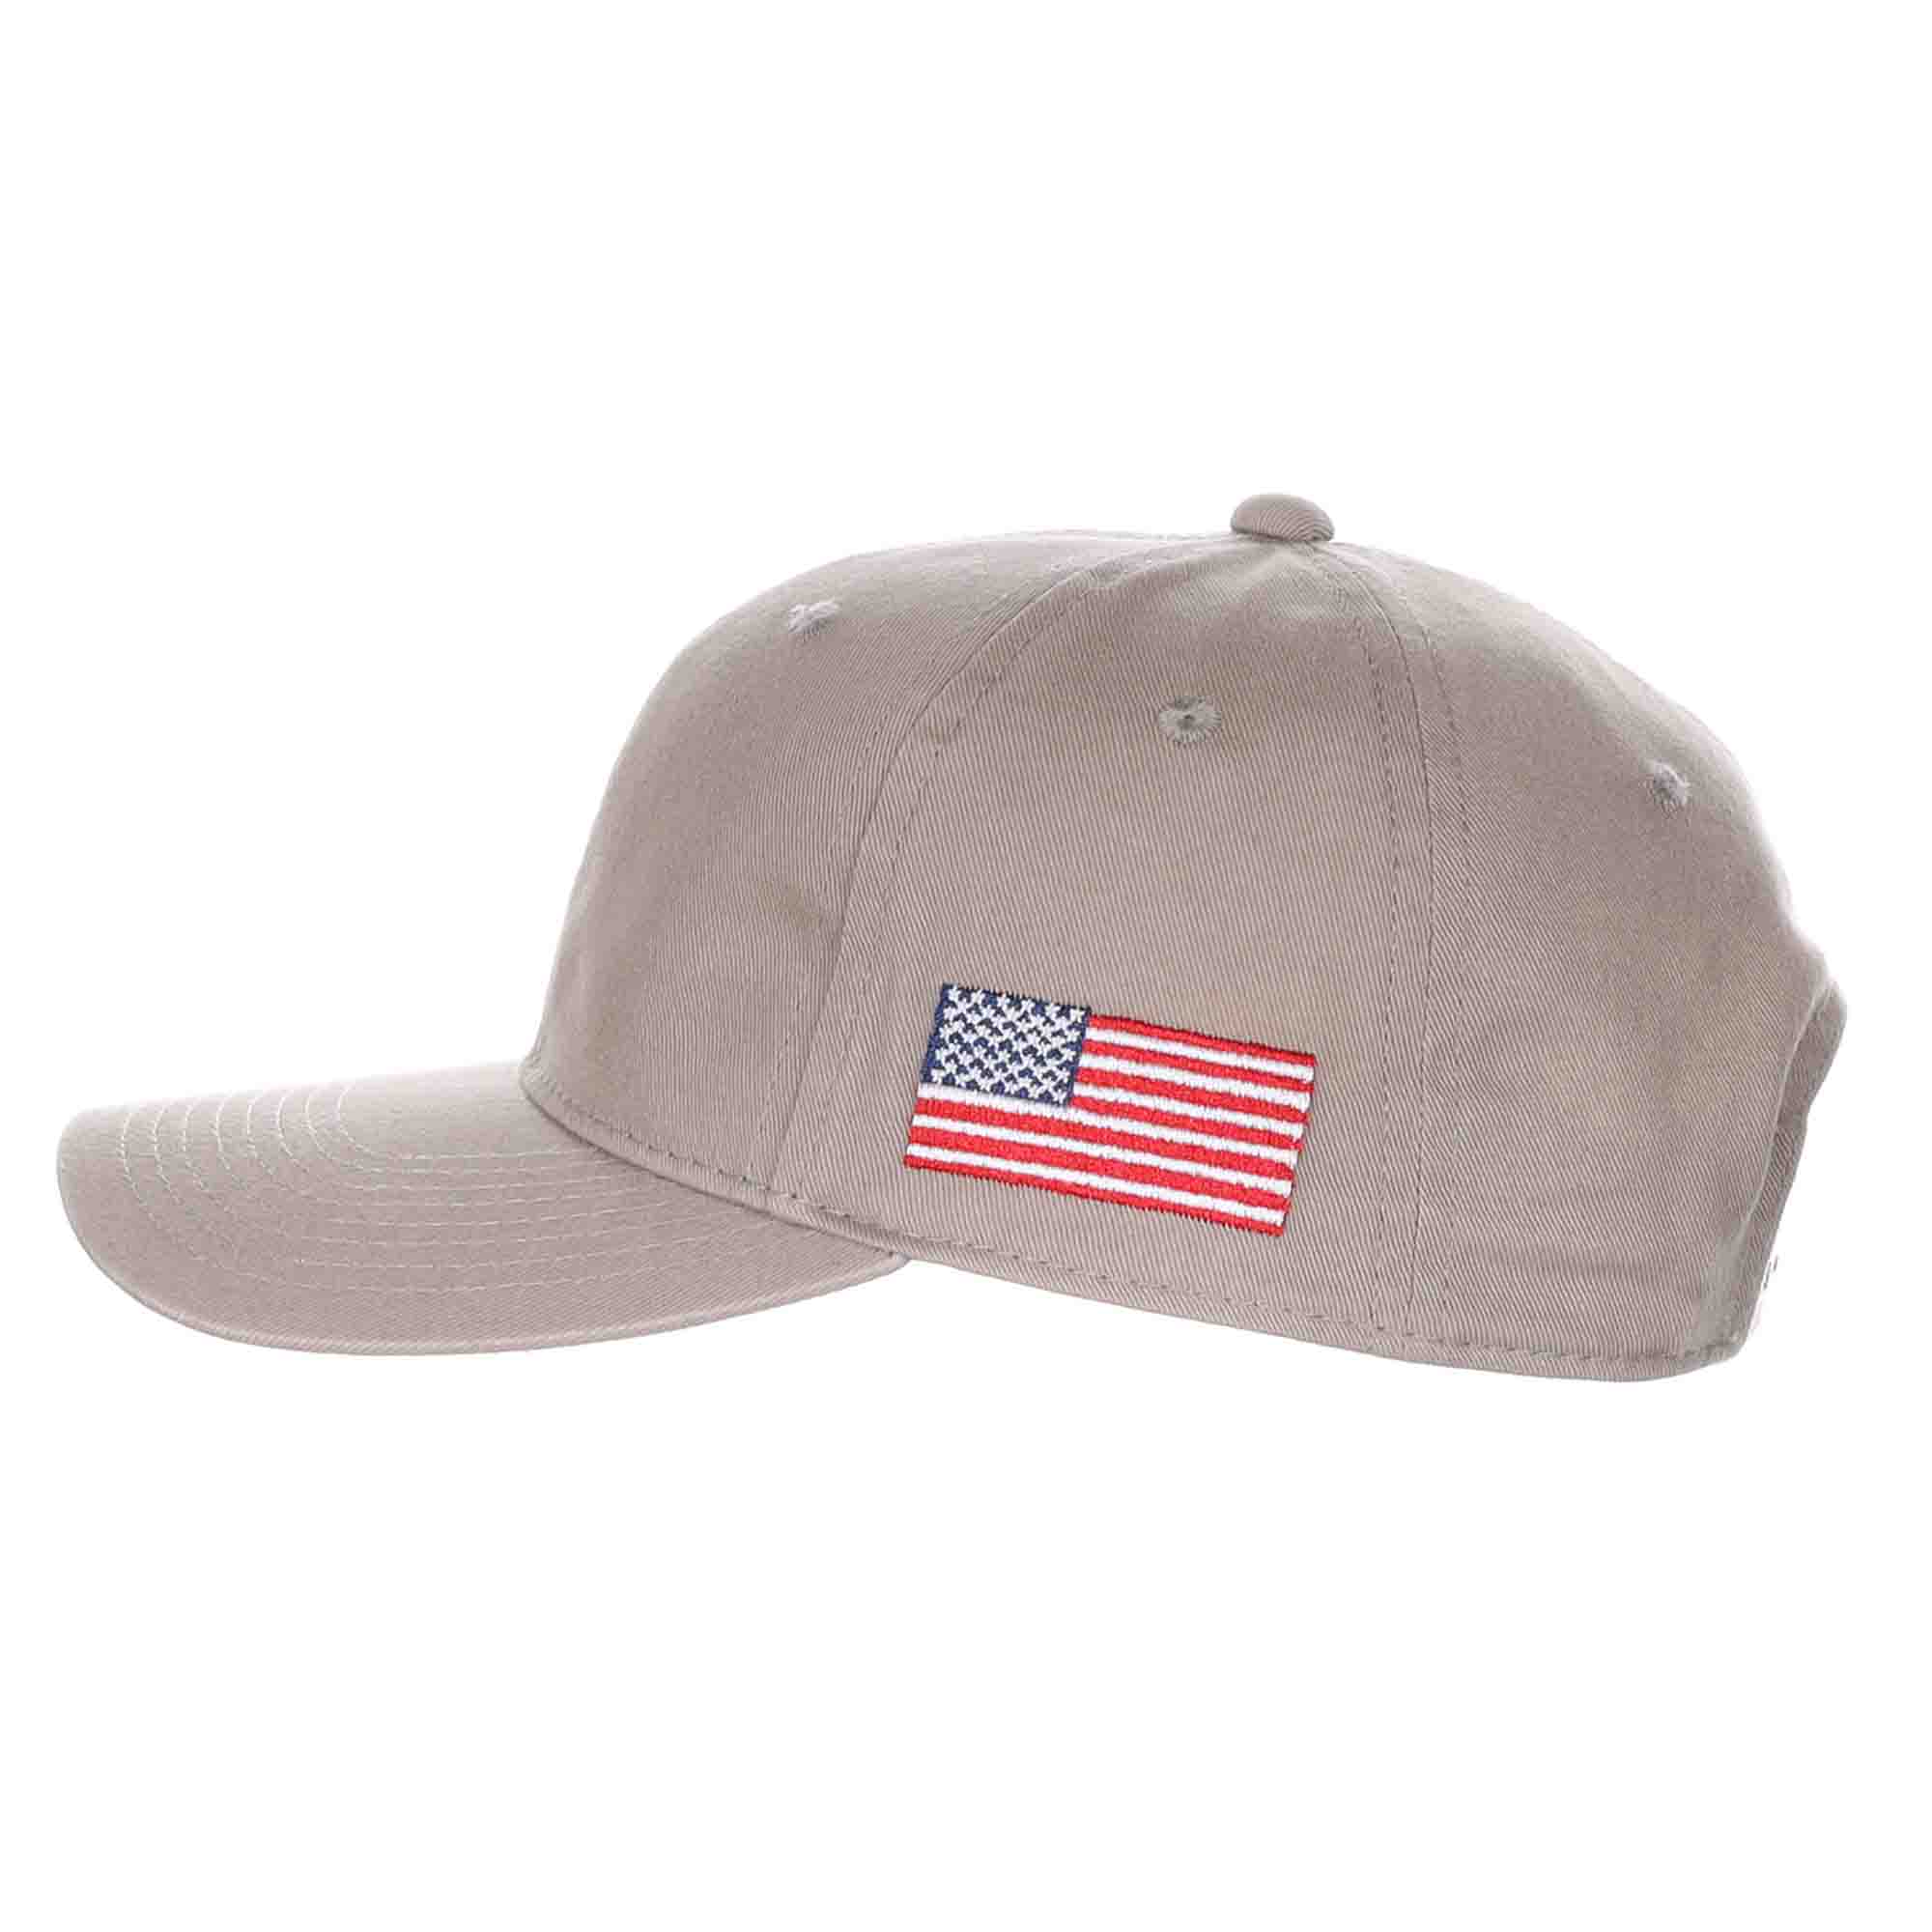 Top Gun USA Flag Structured Cotton Baseball Cap - DPC Hats Cap Dorfman Hat Co. USA66-KAKI Khaki OS 